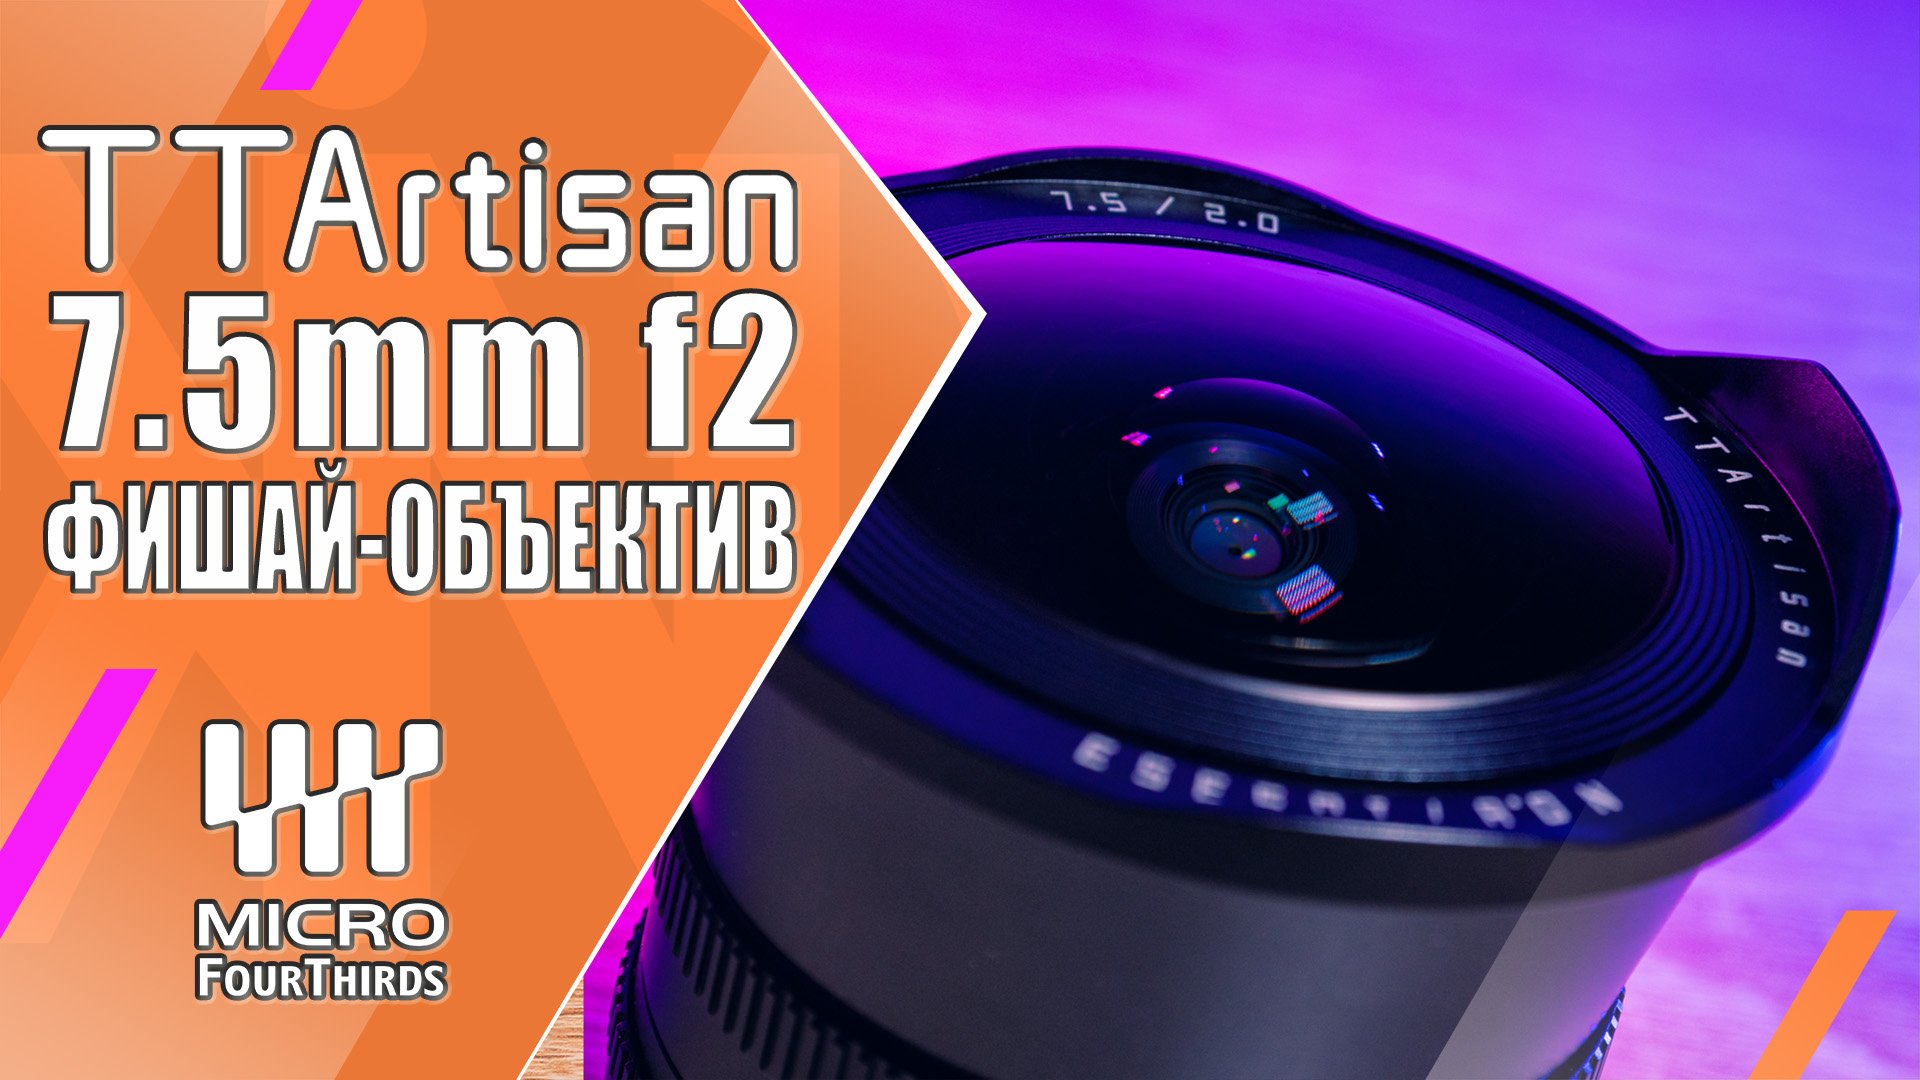 TTArtisan 7.5mm f2 | Обзор светосильного фишай-объектива | E, EOSM, RF, FX, Z, MFT, L